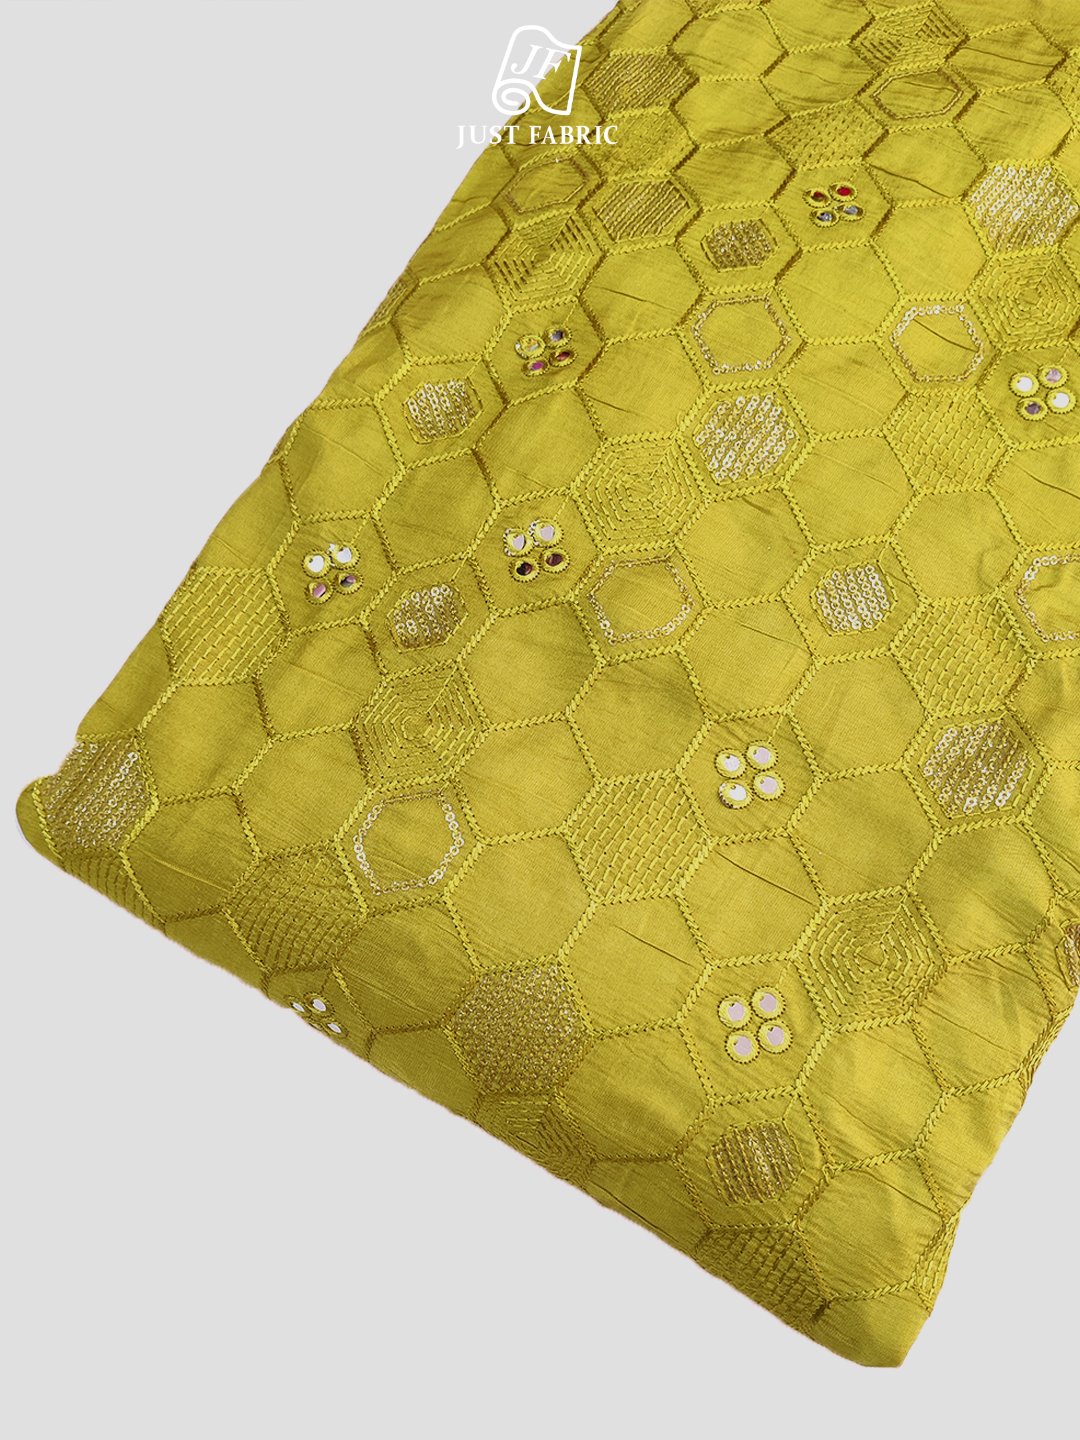 Thread work Hexagon Jaal on Upada Silk Fabric With Embroidery ( 44" Inch Width) JUST FABRIC